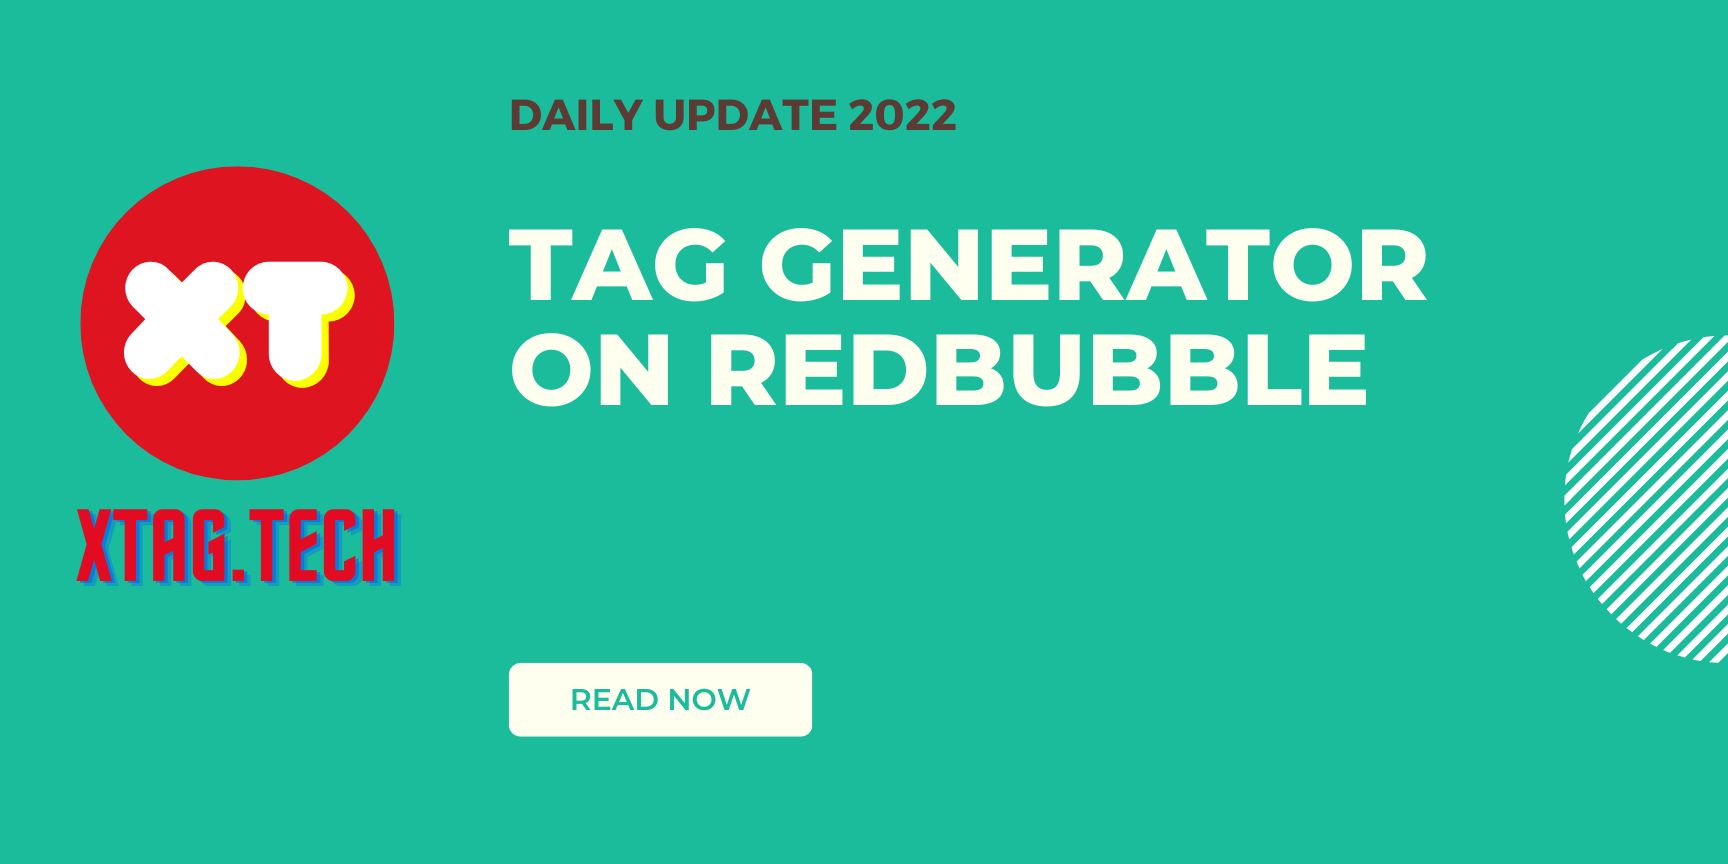 Redbubble Tag Generator